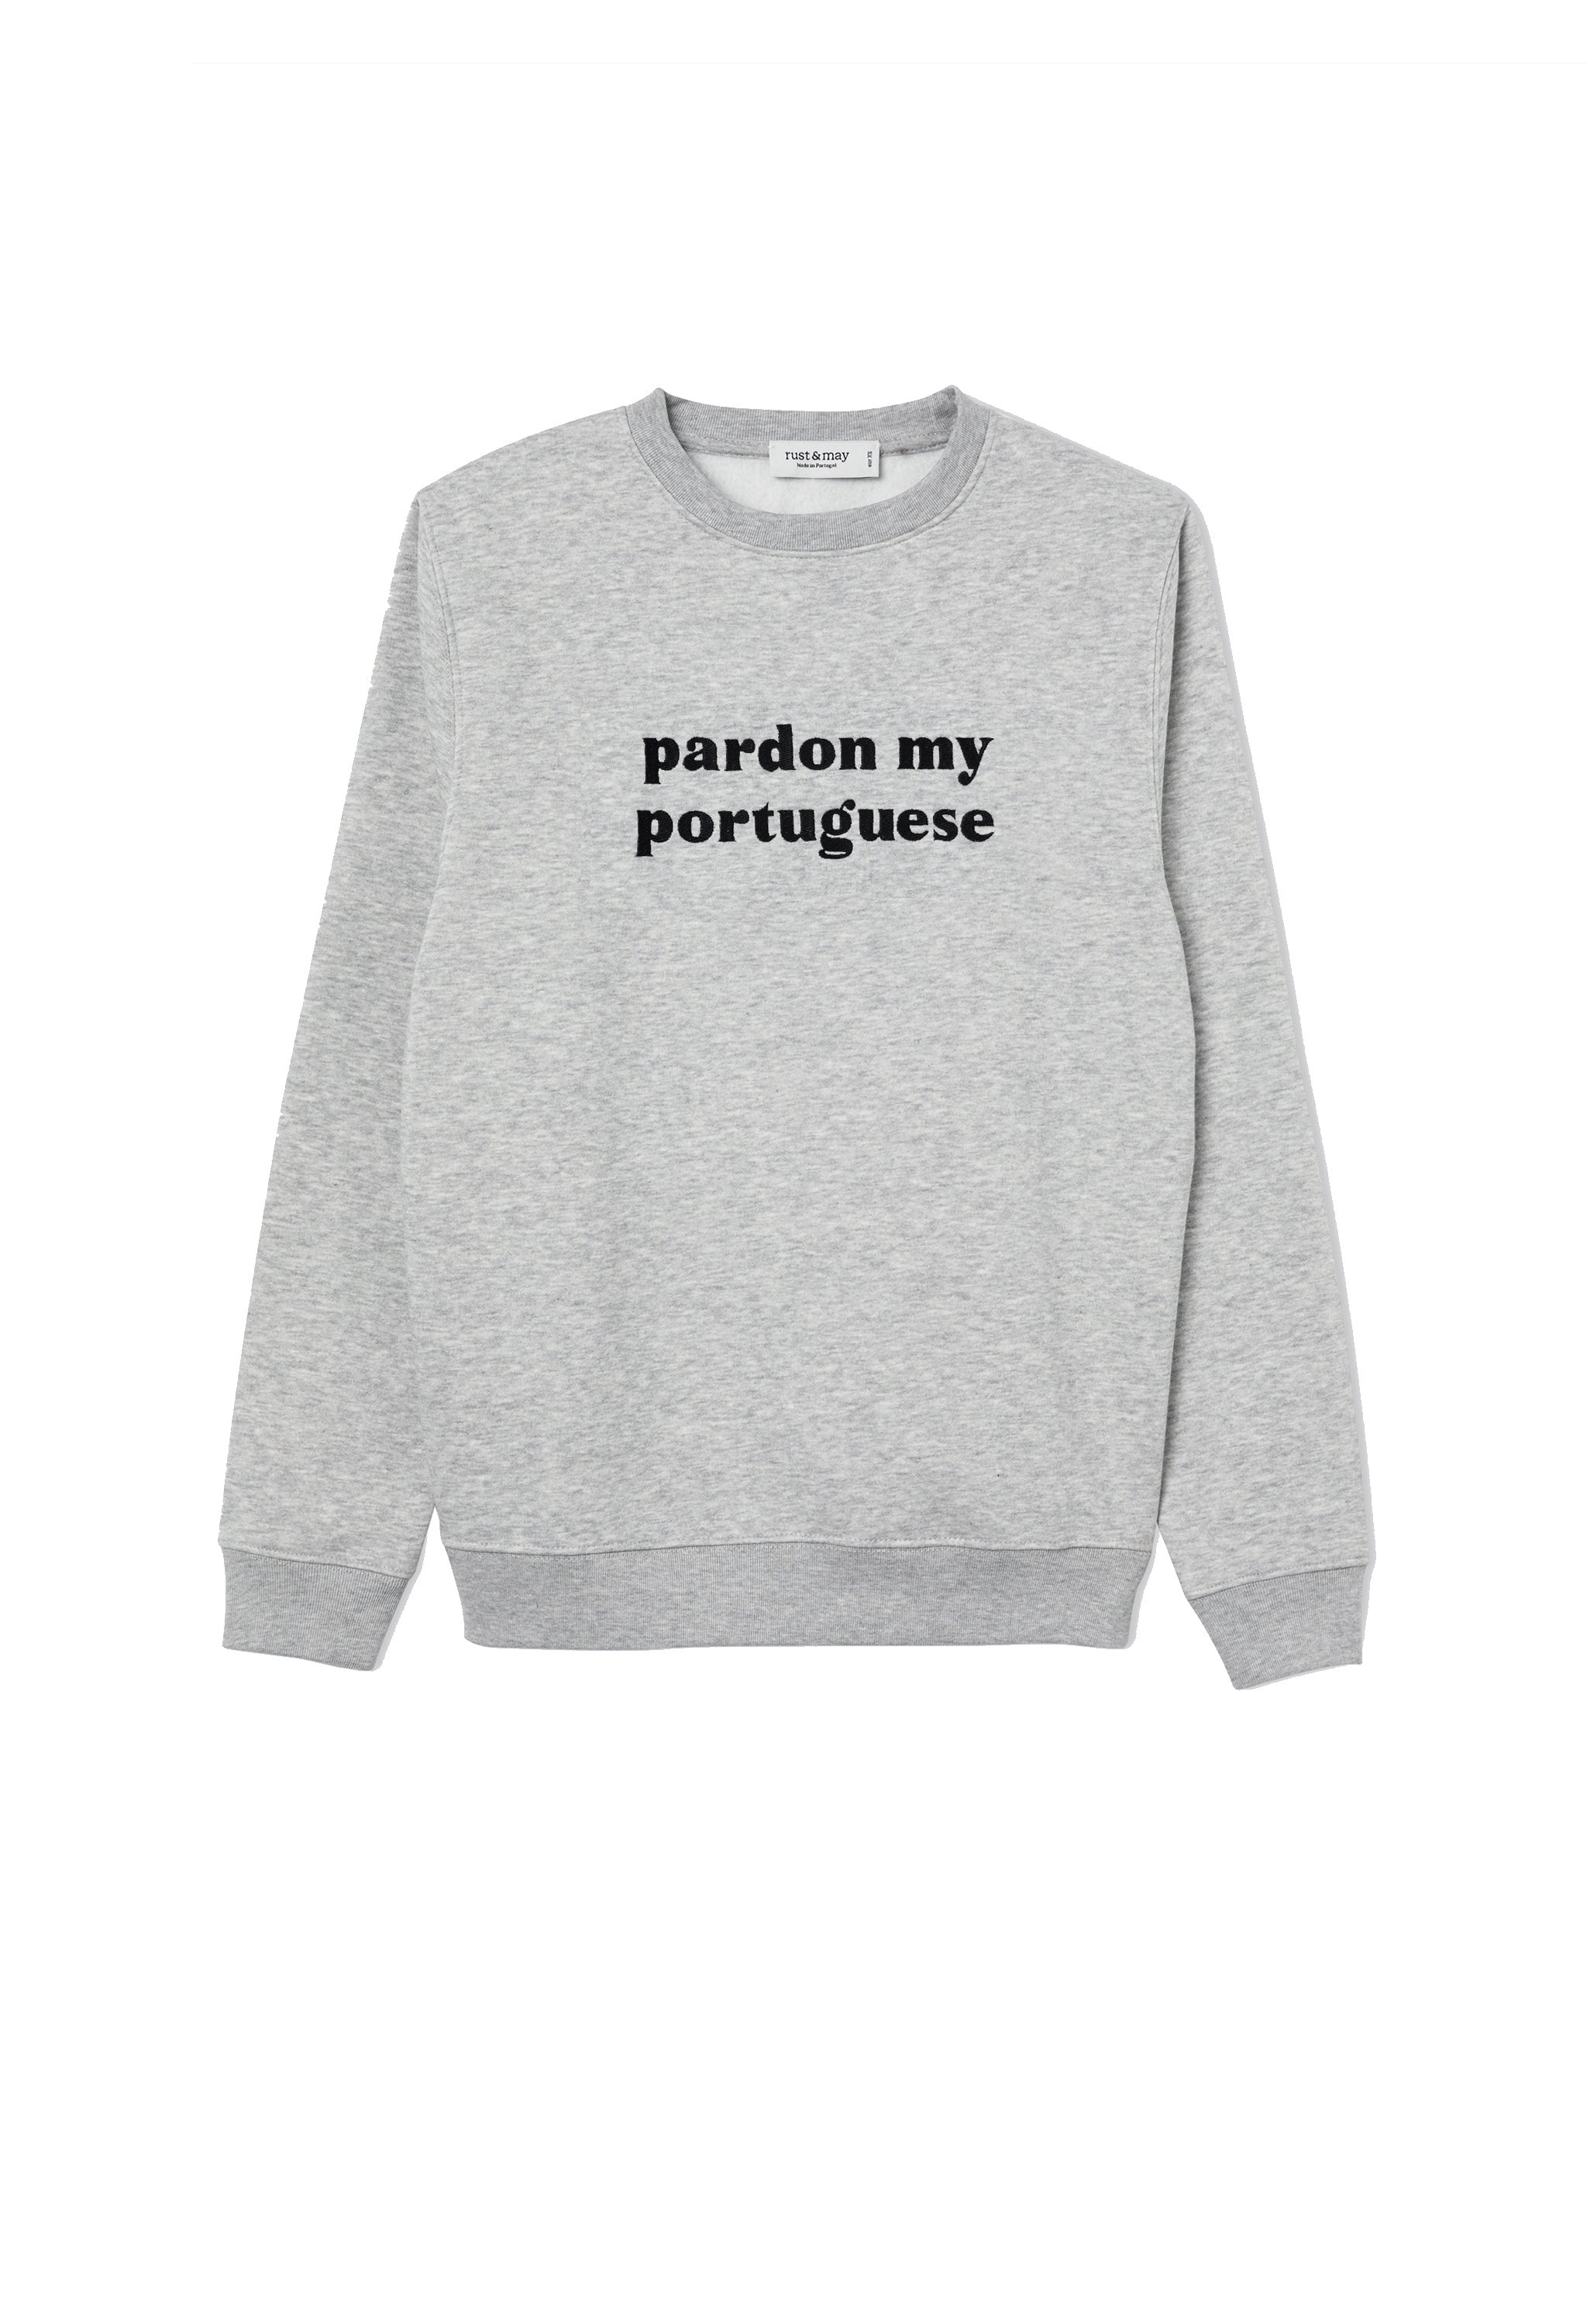 Pardon my Portuguese Sweatshirt (Adulto)